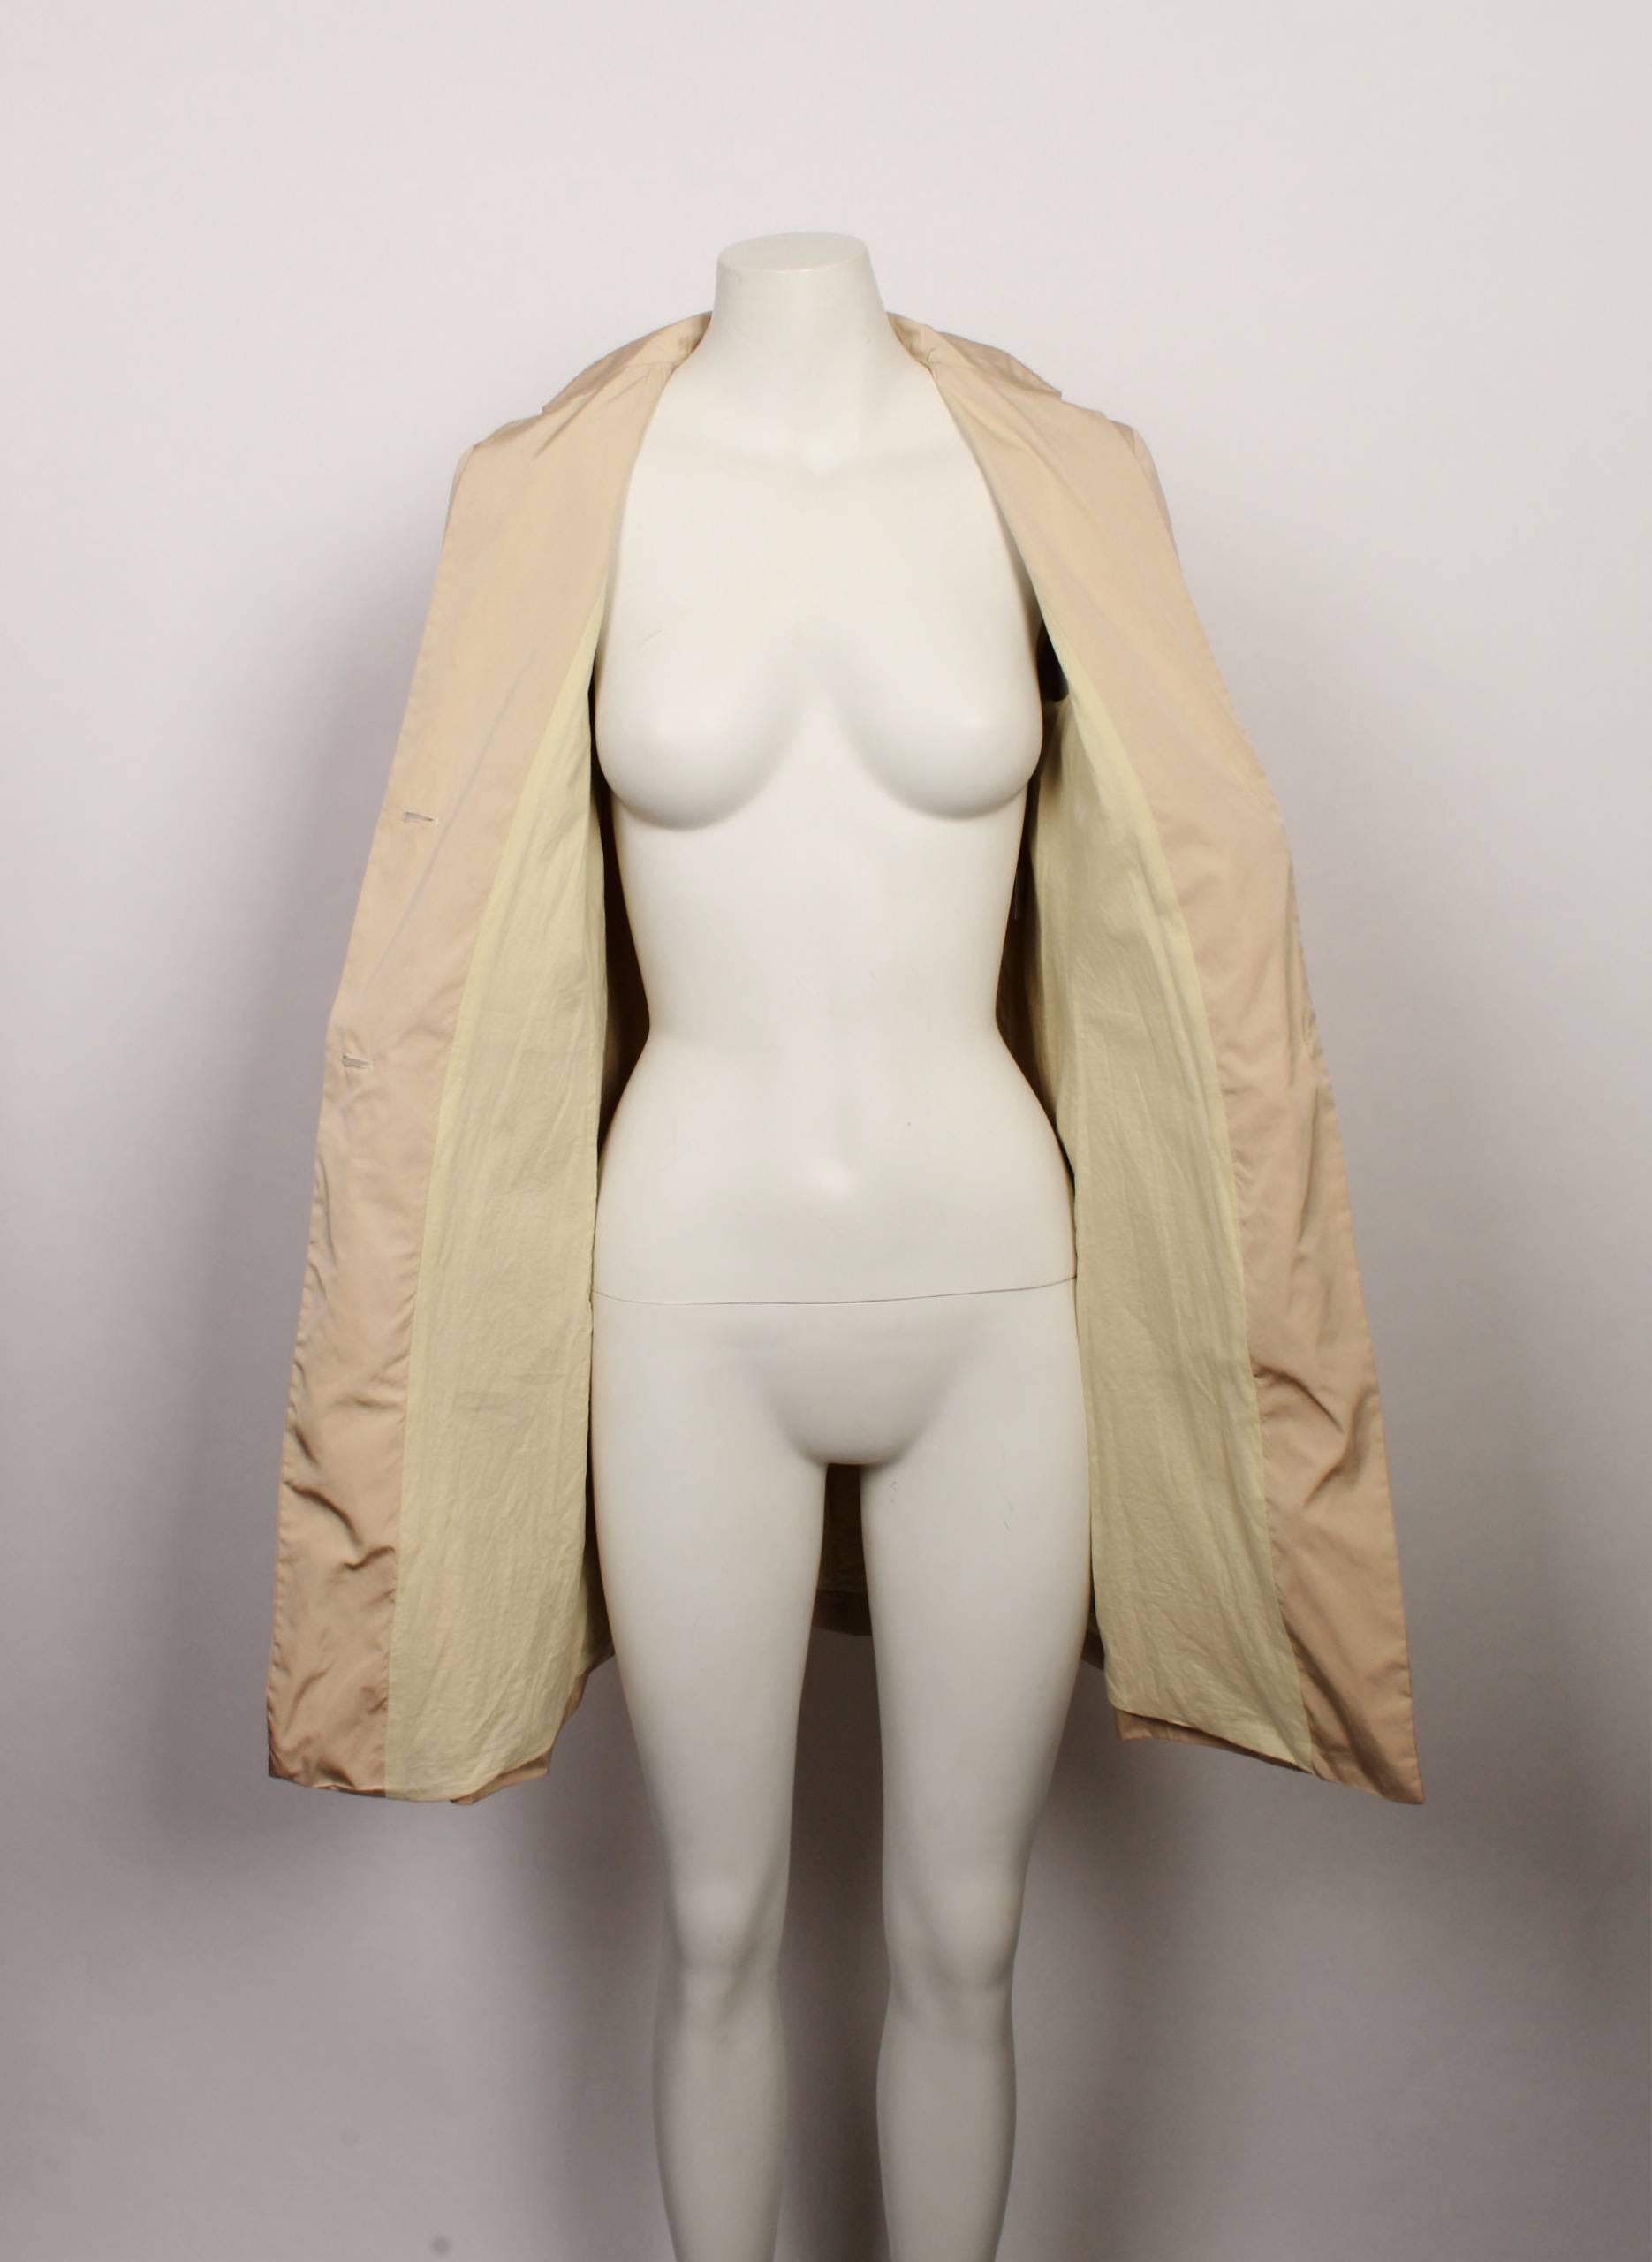 Jil Sander Coat In Good Condition For Sale In Melbourne, Victoria